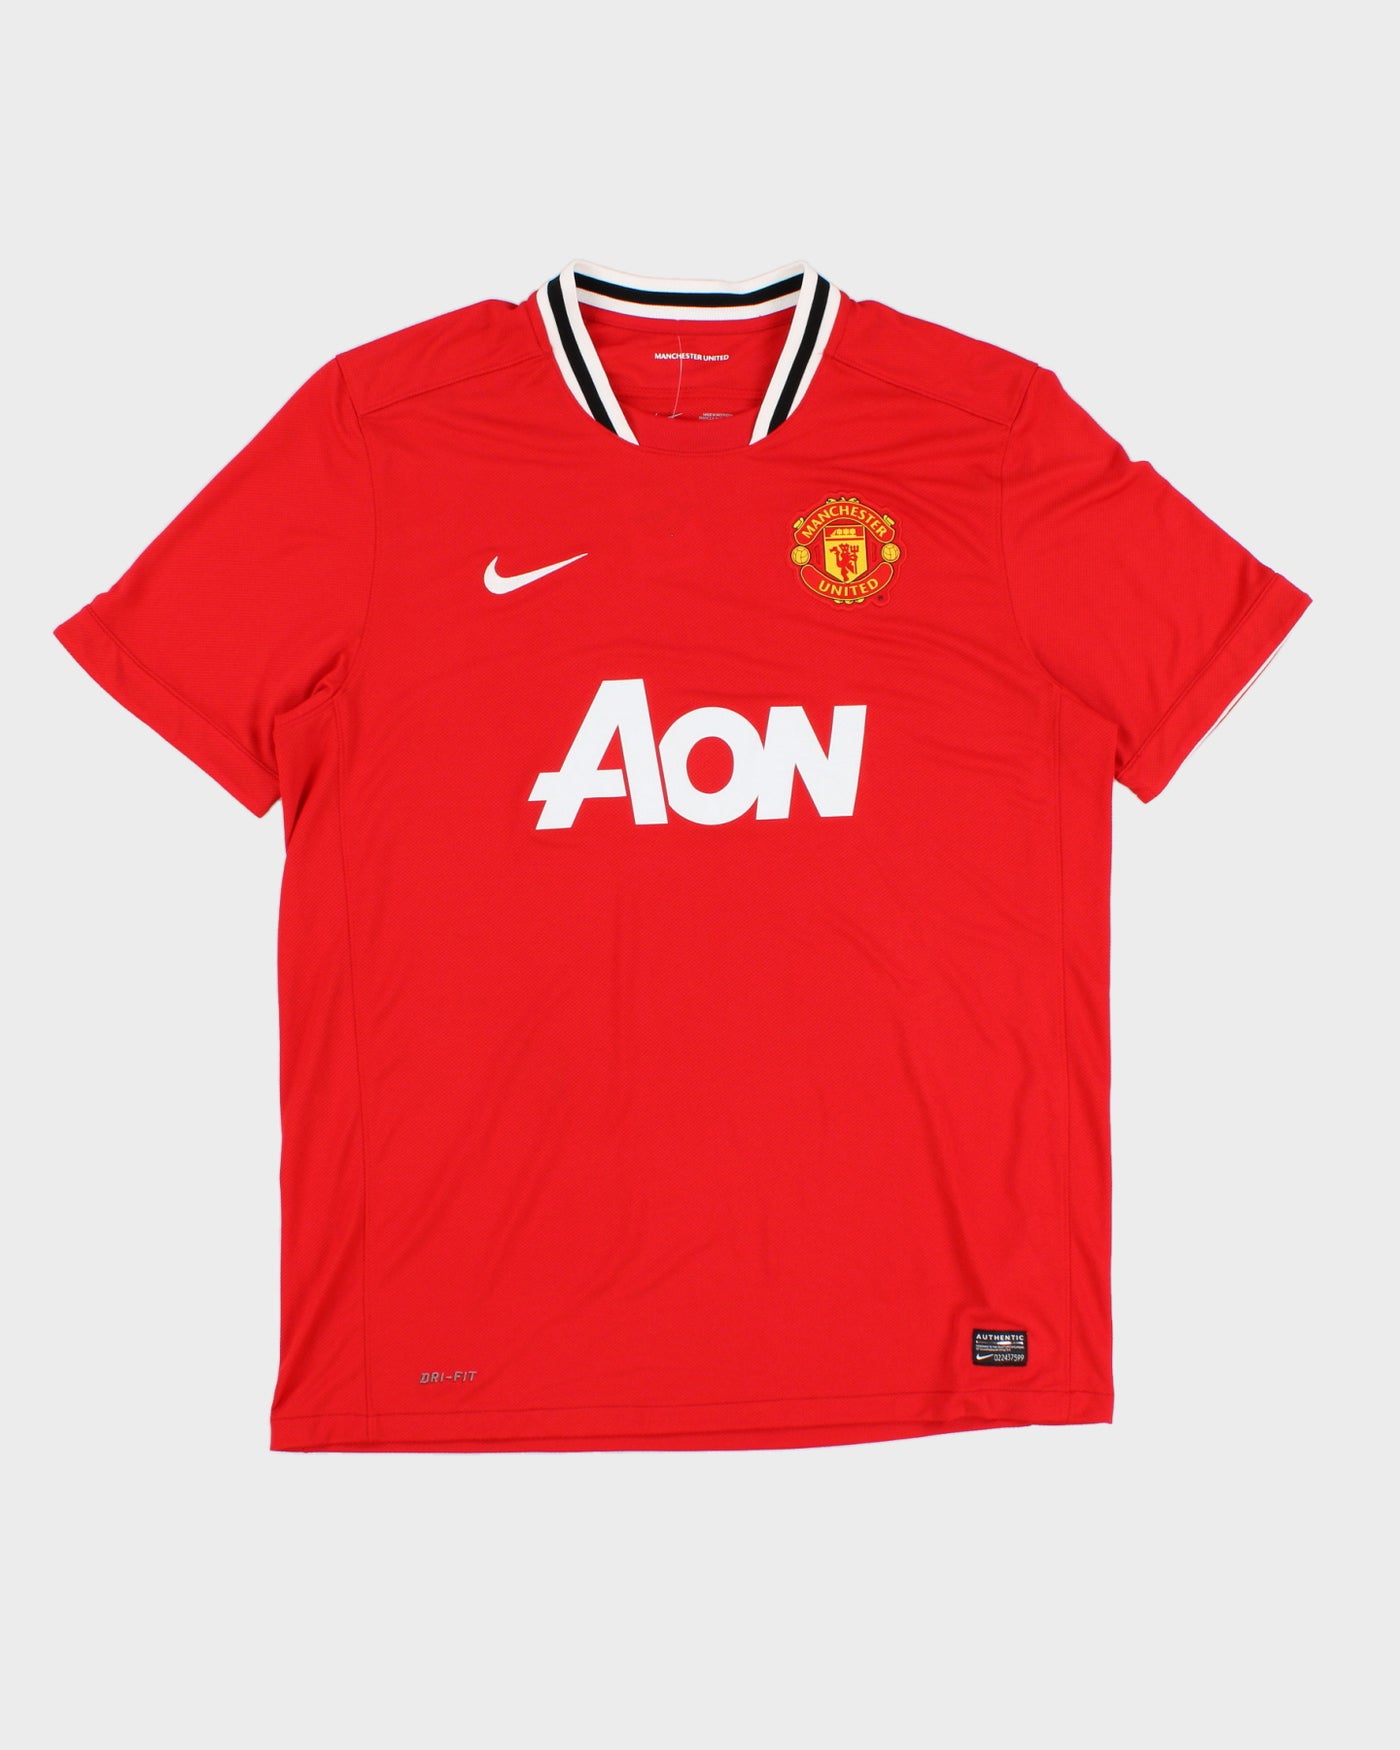 Nike Manchester United Football Shirt - XL